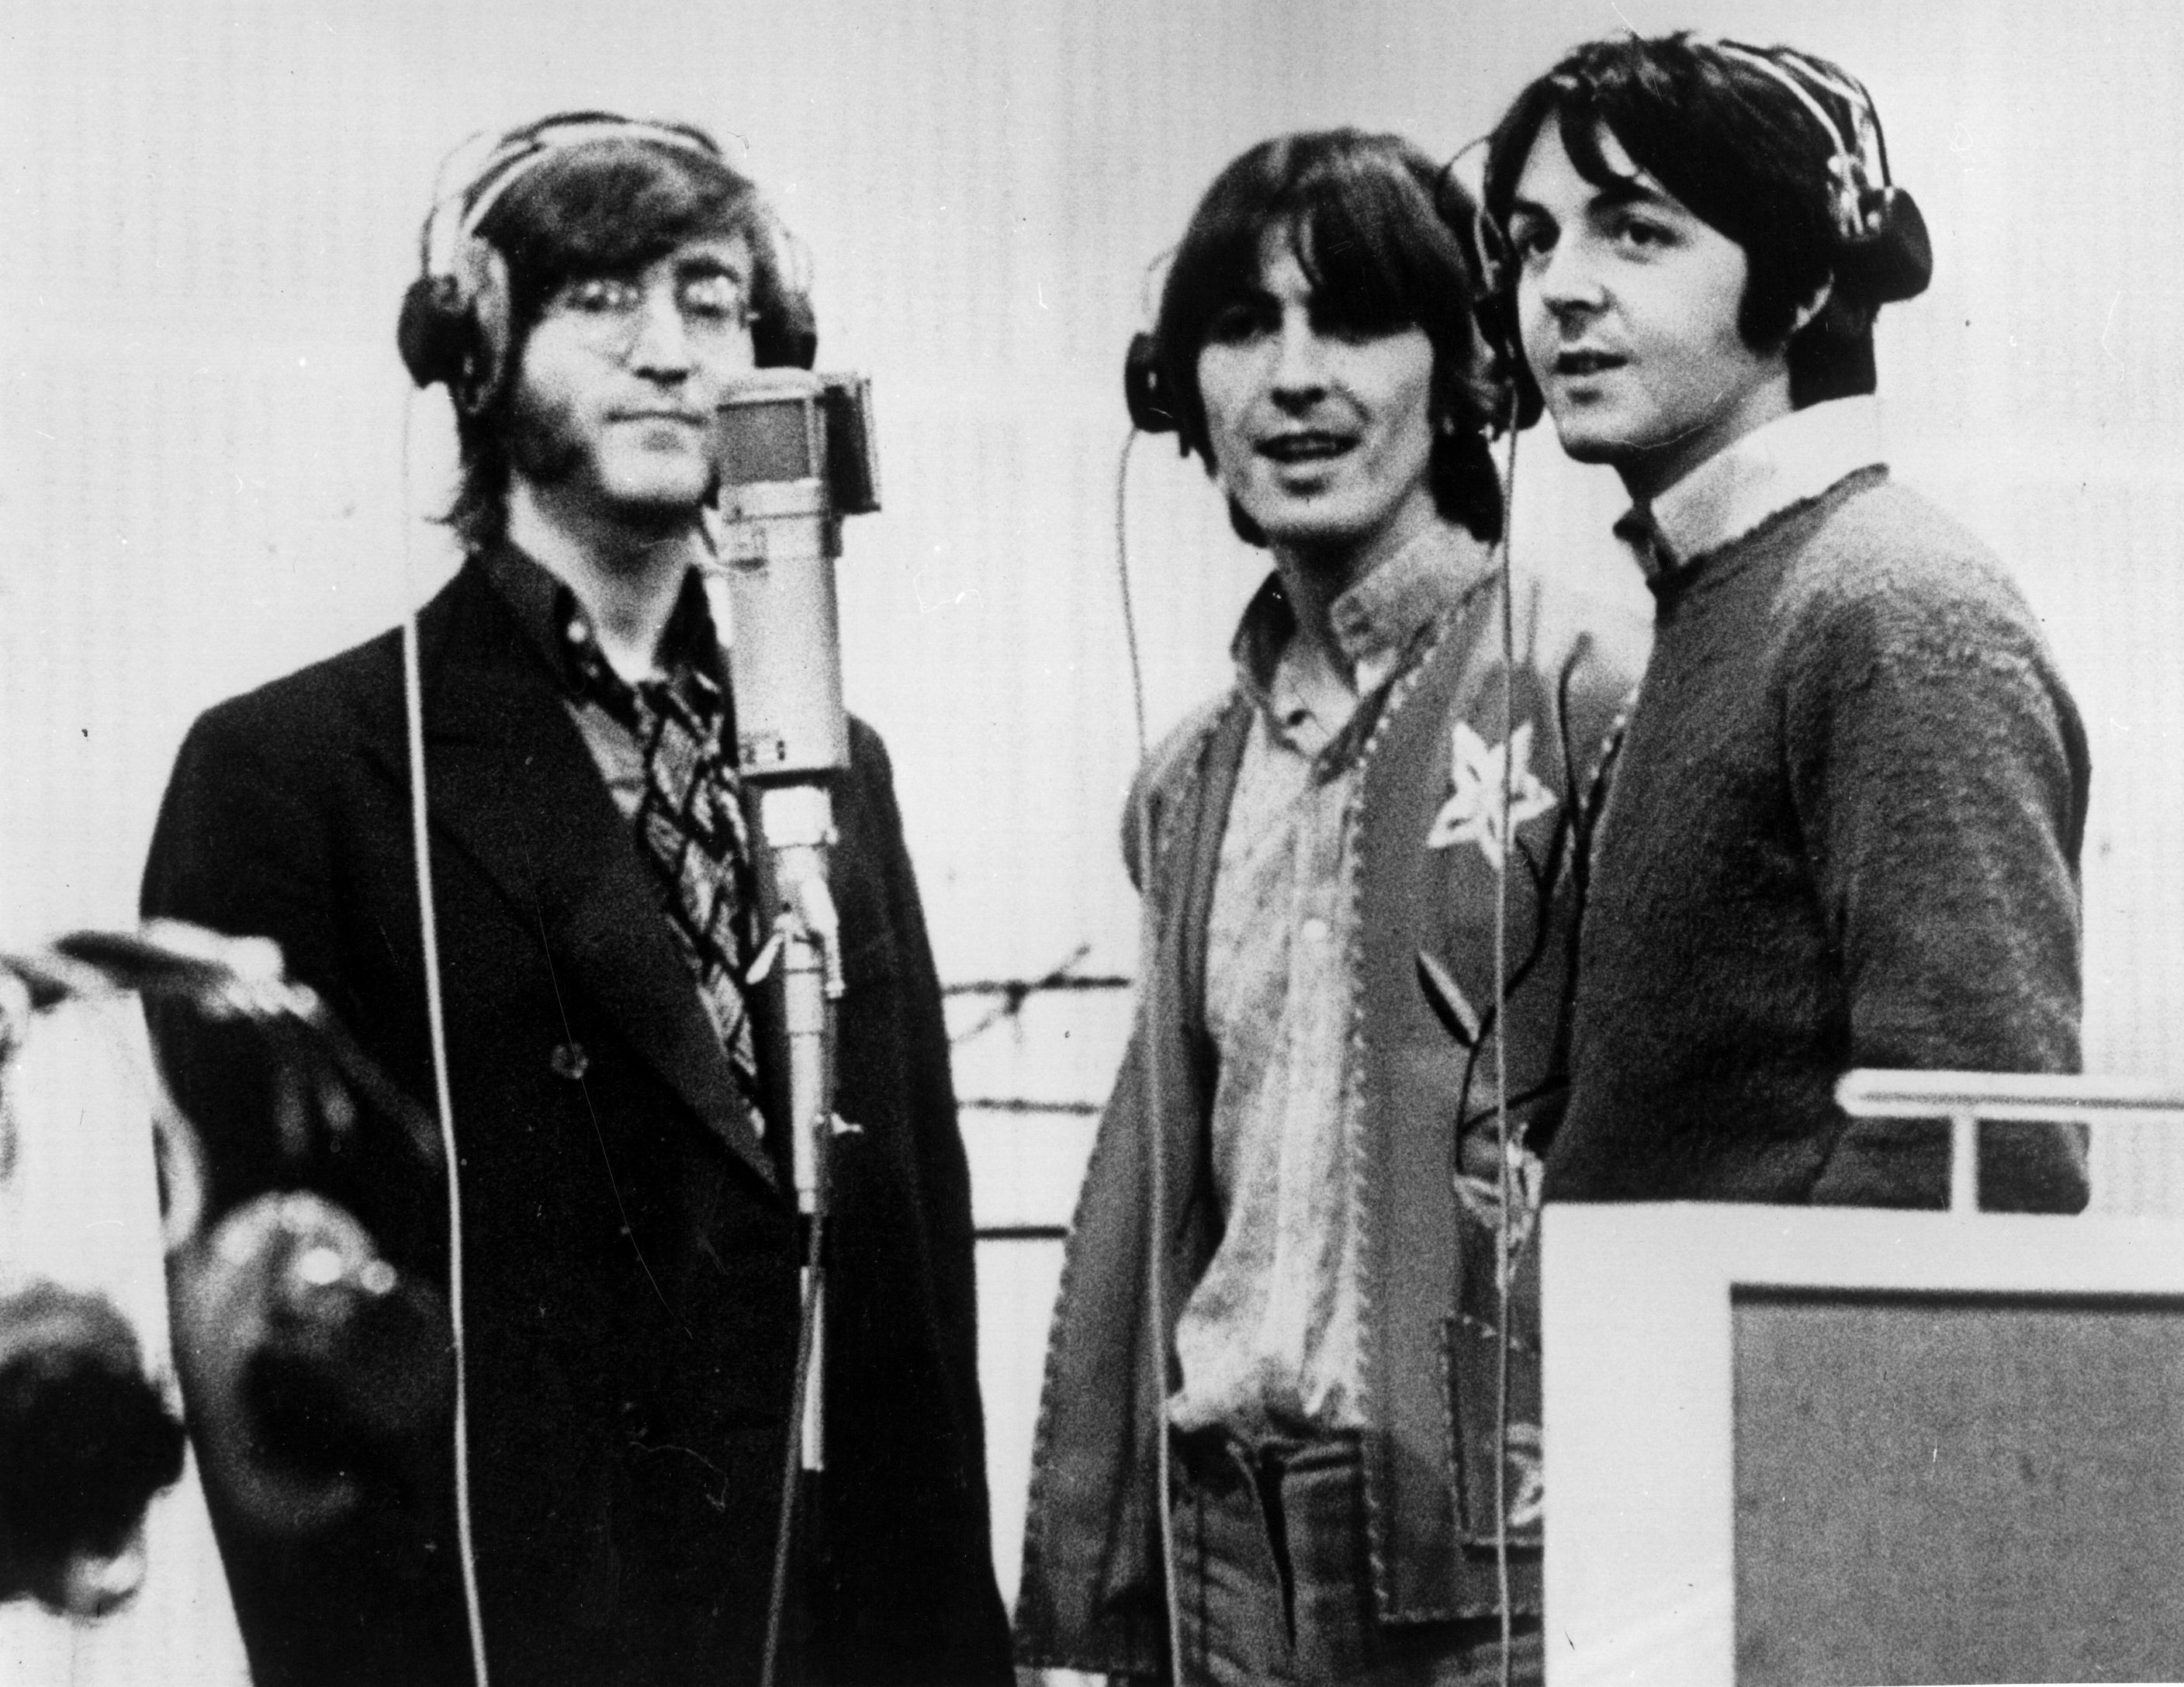 The Beatles' John Lennon, George Harrison, and Paul McCartney near microphones